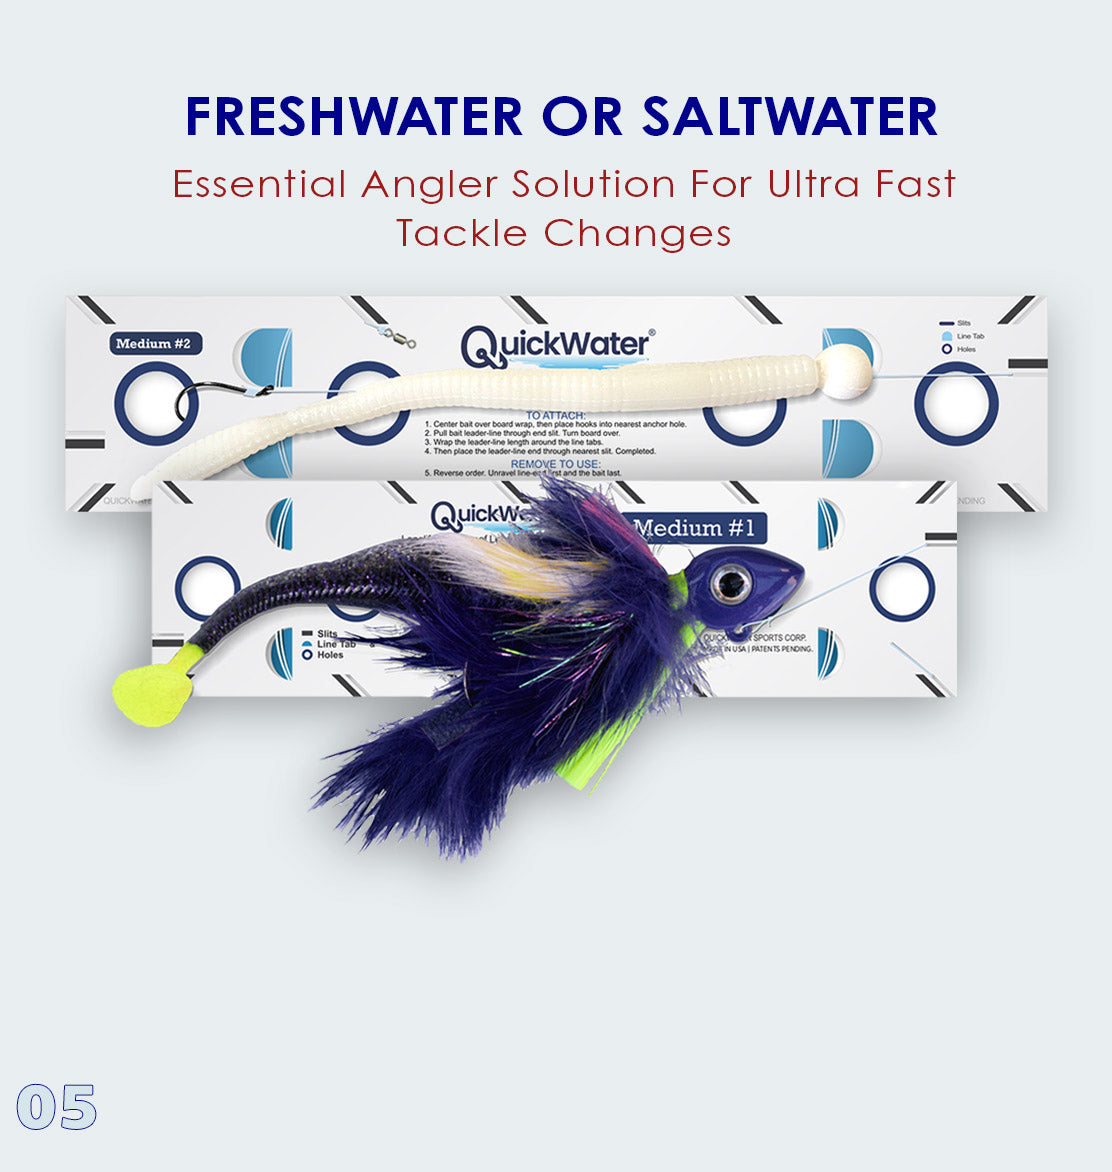 Slide 5: Freshwater or saltwater. Essential angler solution for ultra fast tackle changes.